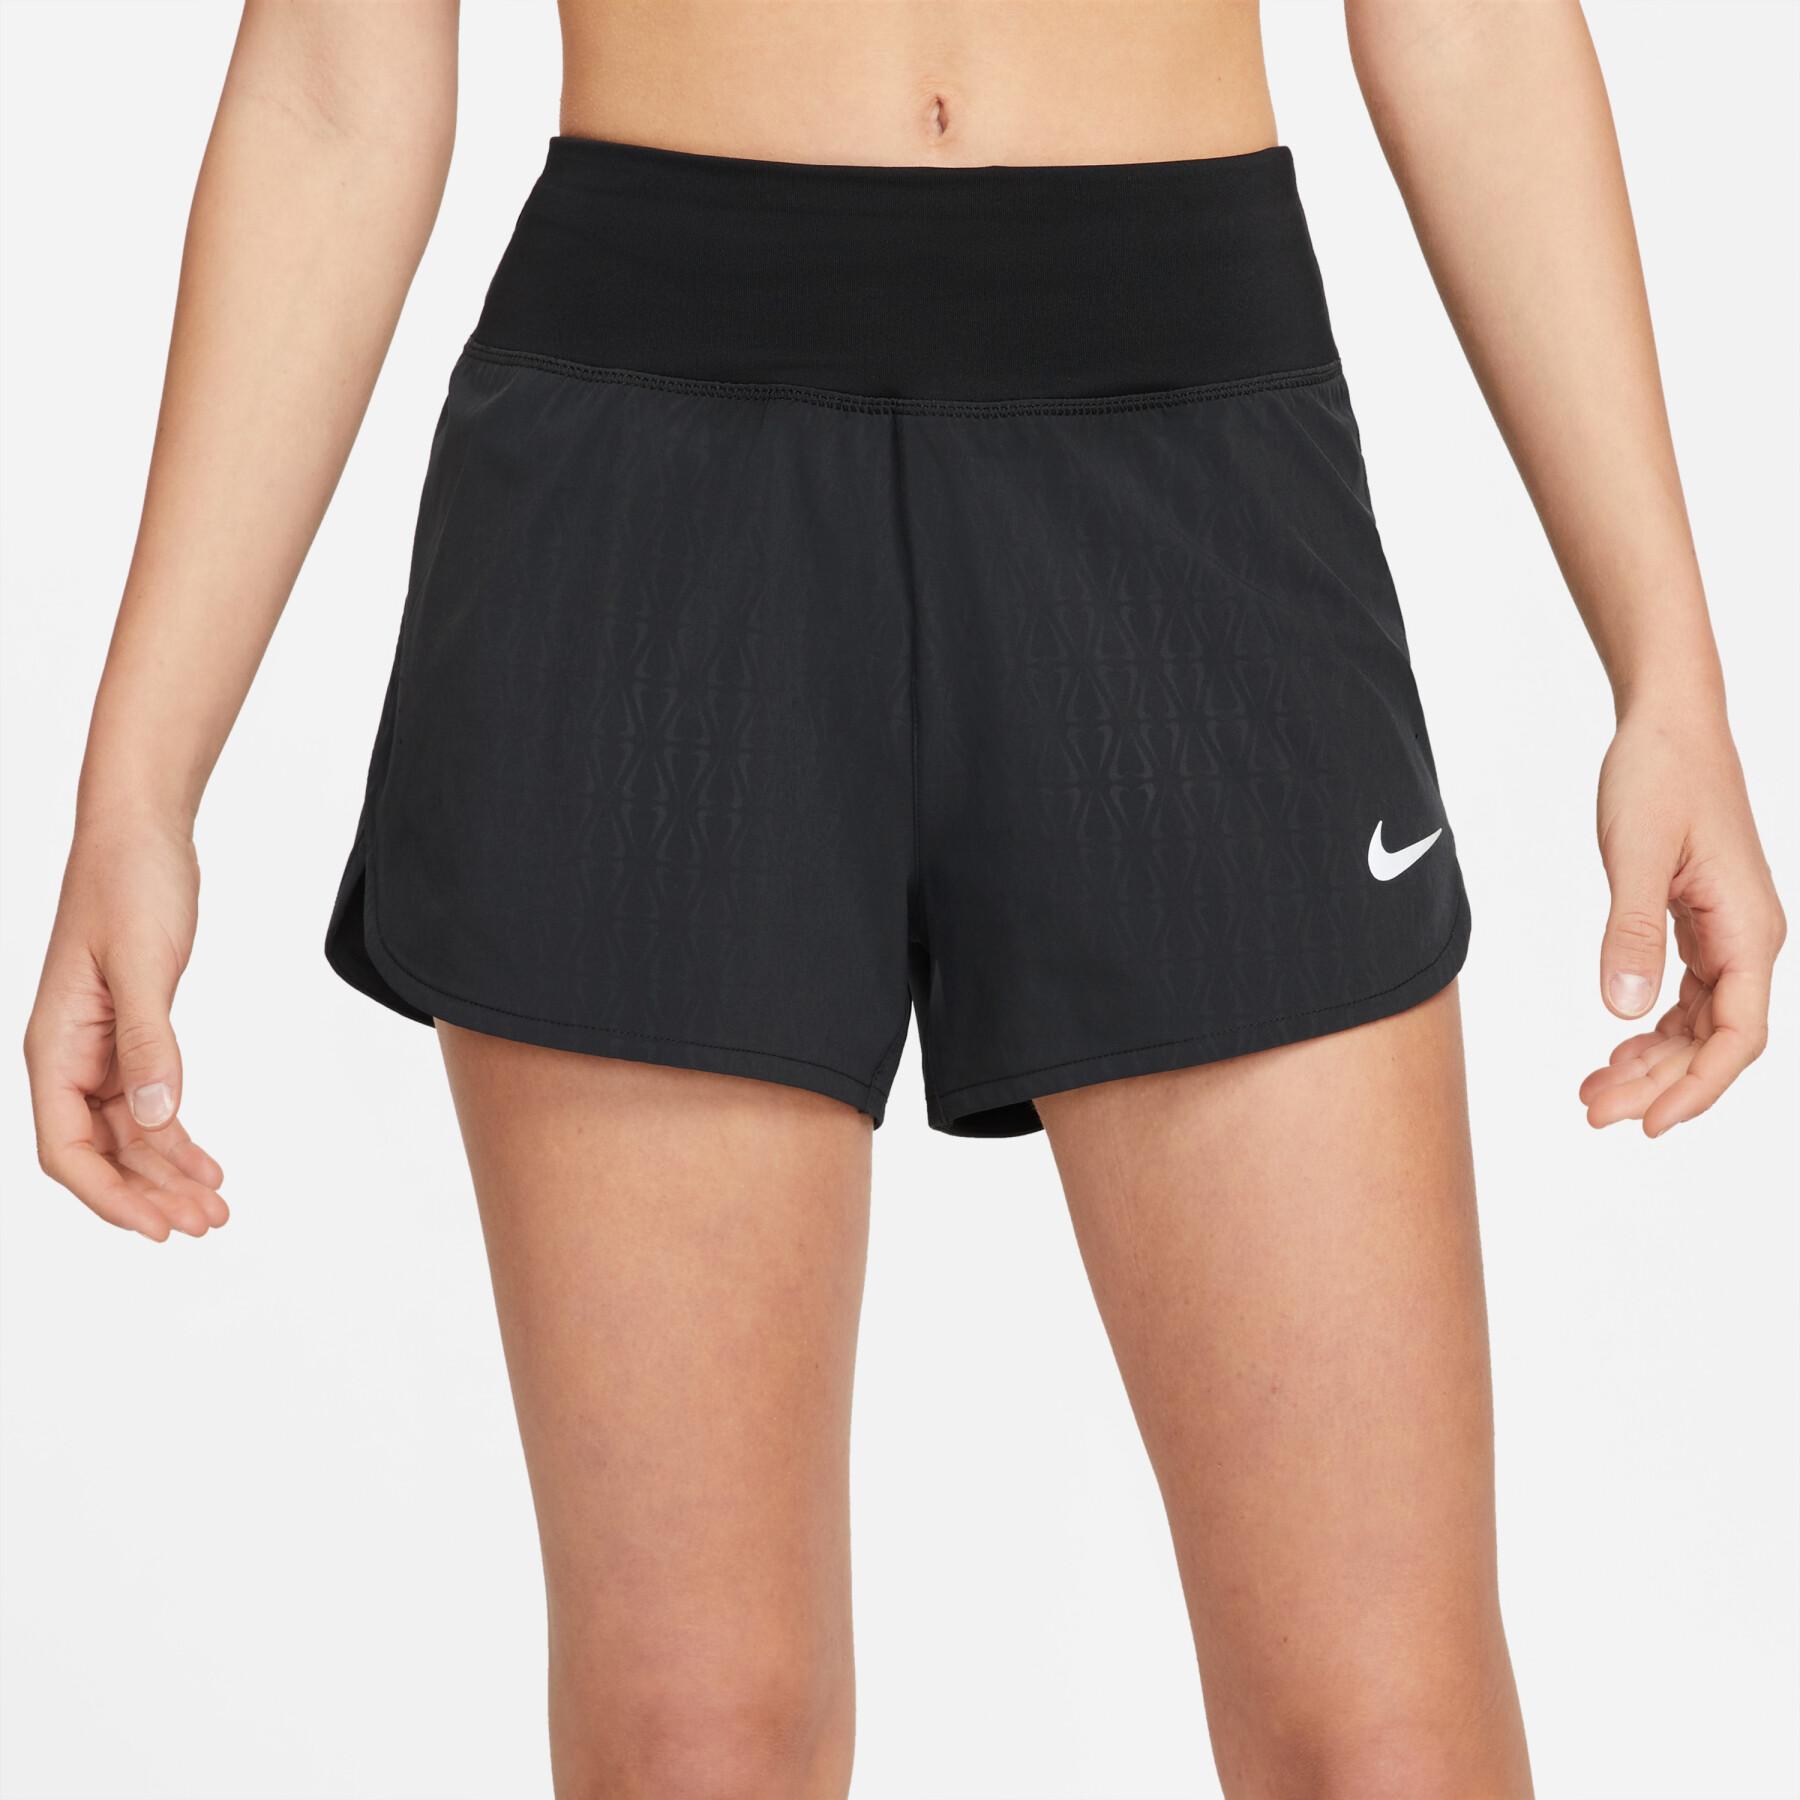 Women's shorts Nike Dri-FIT Eclipse